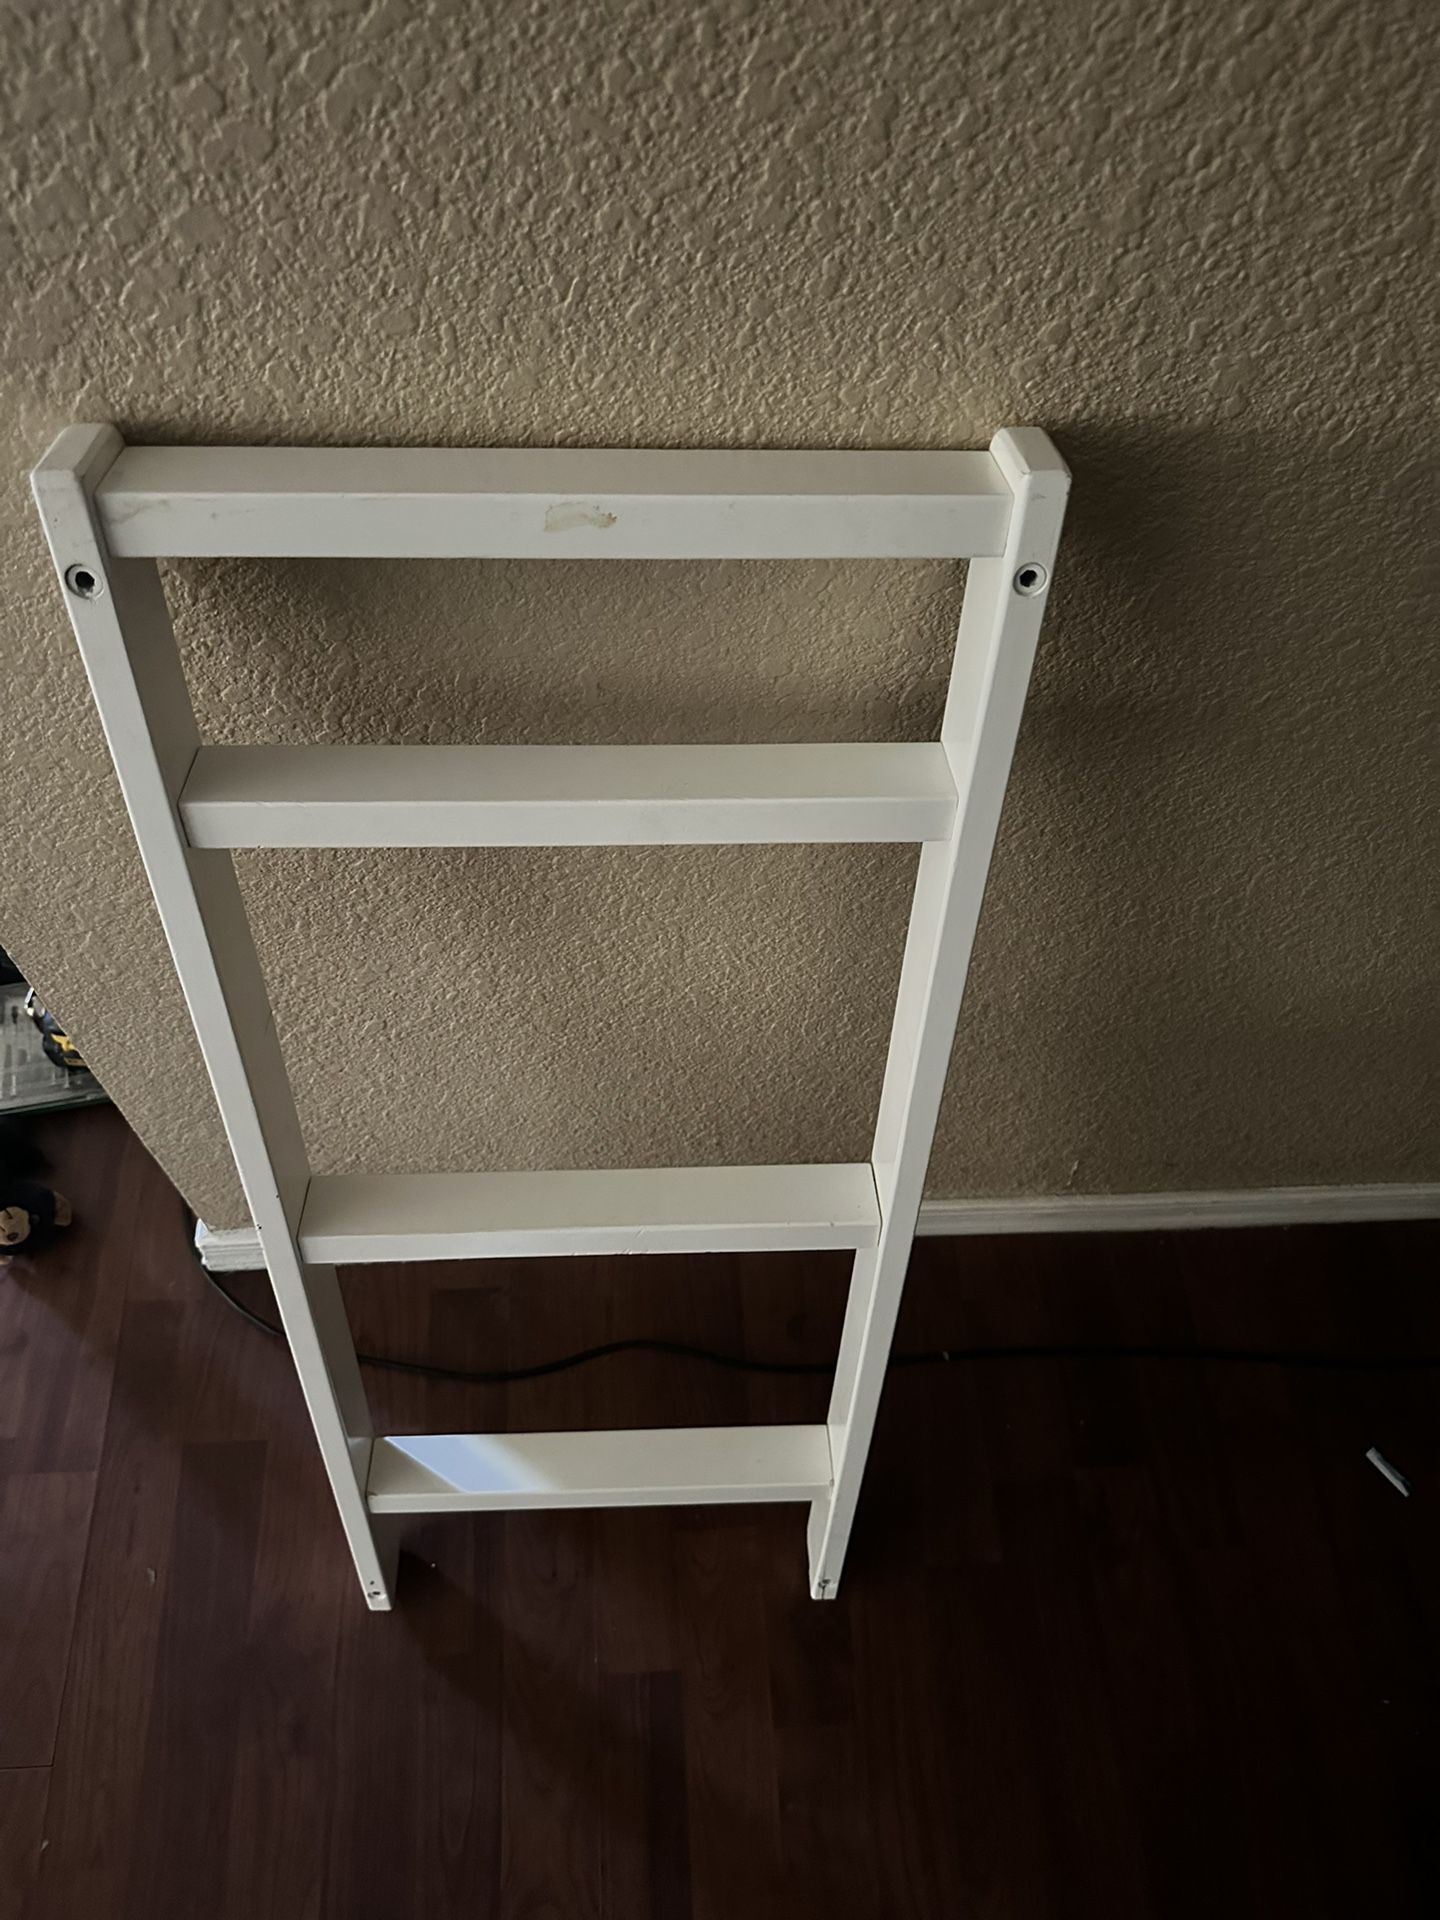 Bunk Bed Ladder 